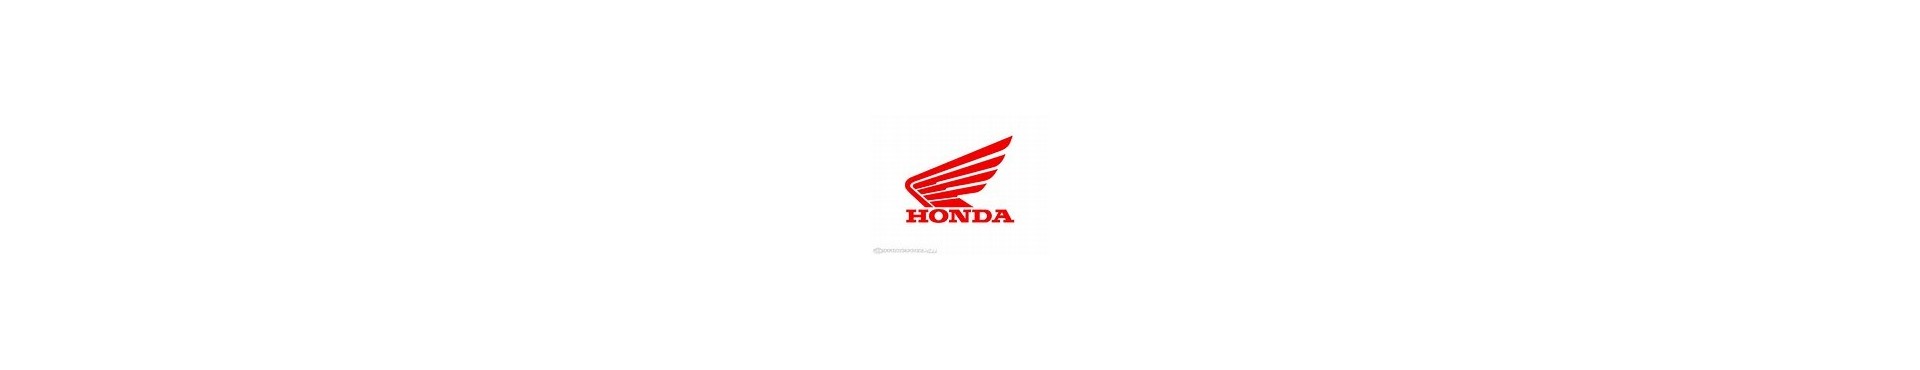 Ricambi originali Honda - Honda Original Parts